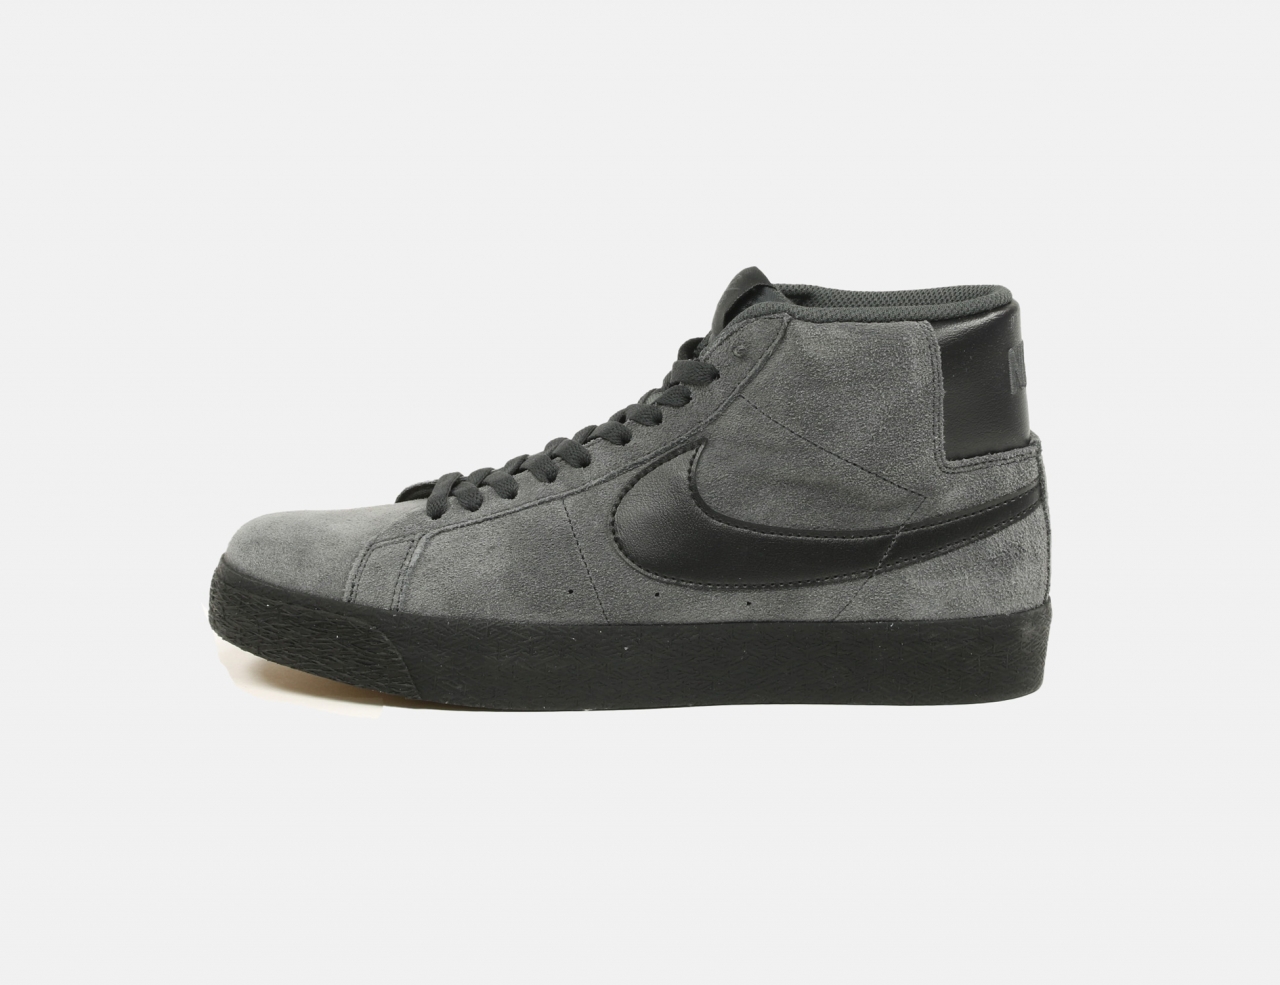 Nike SB Nike SB Blazer Mid Sneaker - Anthracite / Black